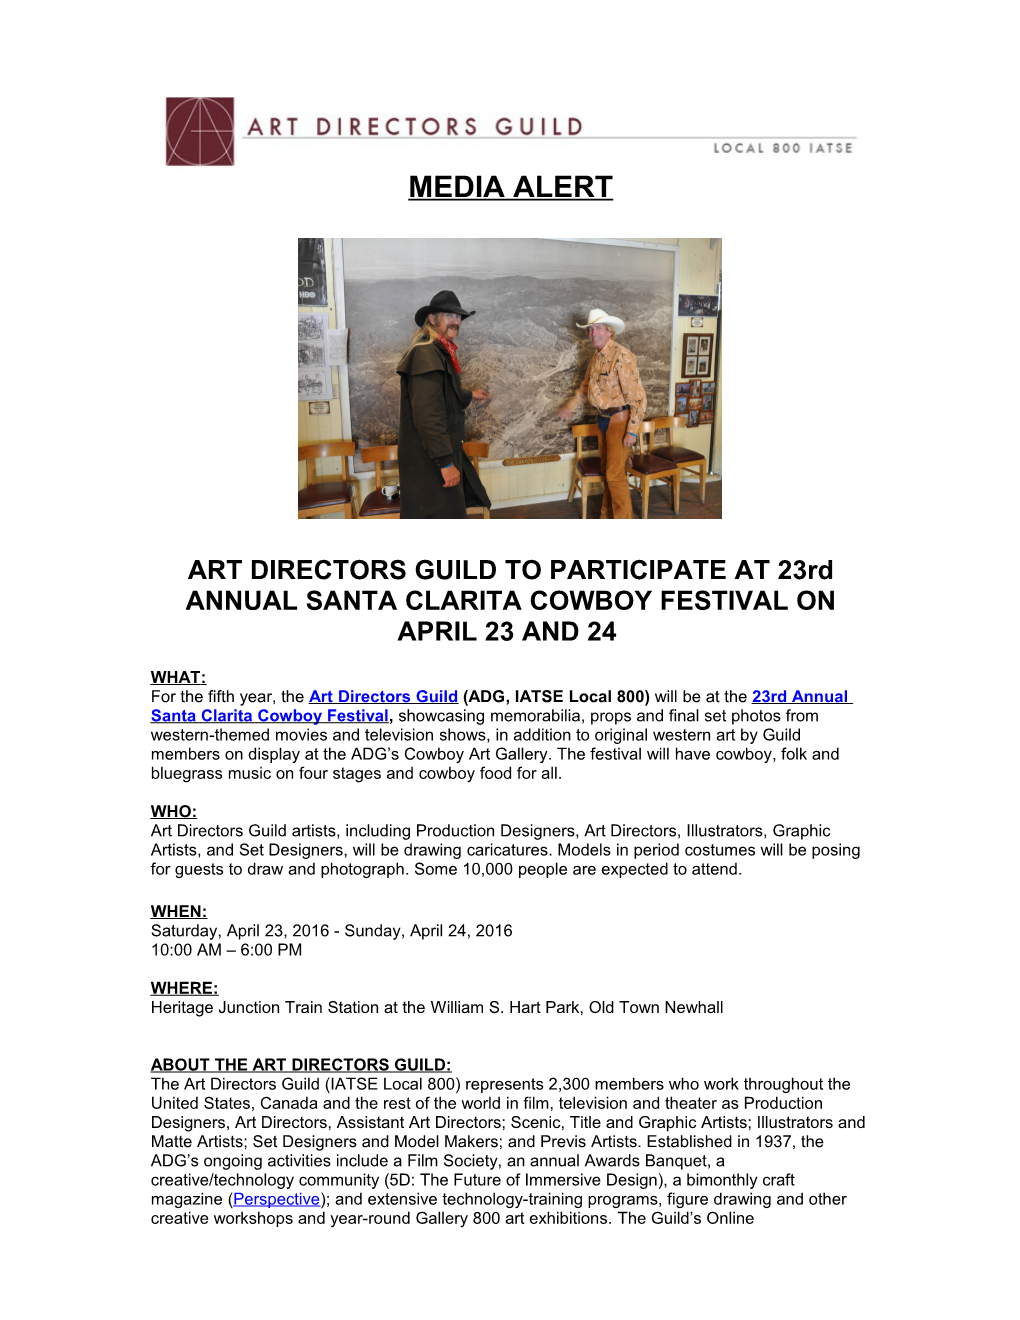 ART DIRECTORS GUILD to PARTICIPATE at 23Rd ANNUAL SANTA CLARITA COWBOY FESTIVAL on APRIL